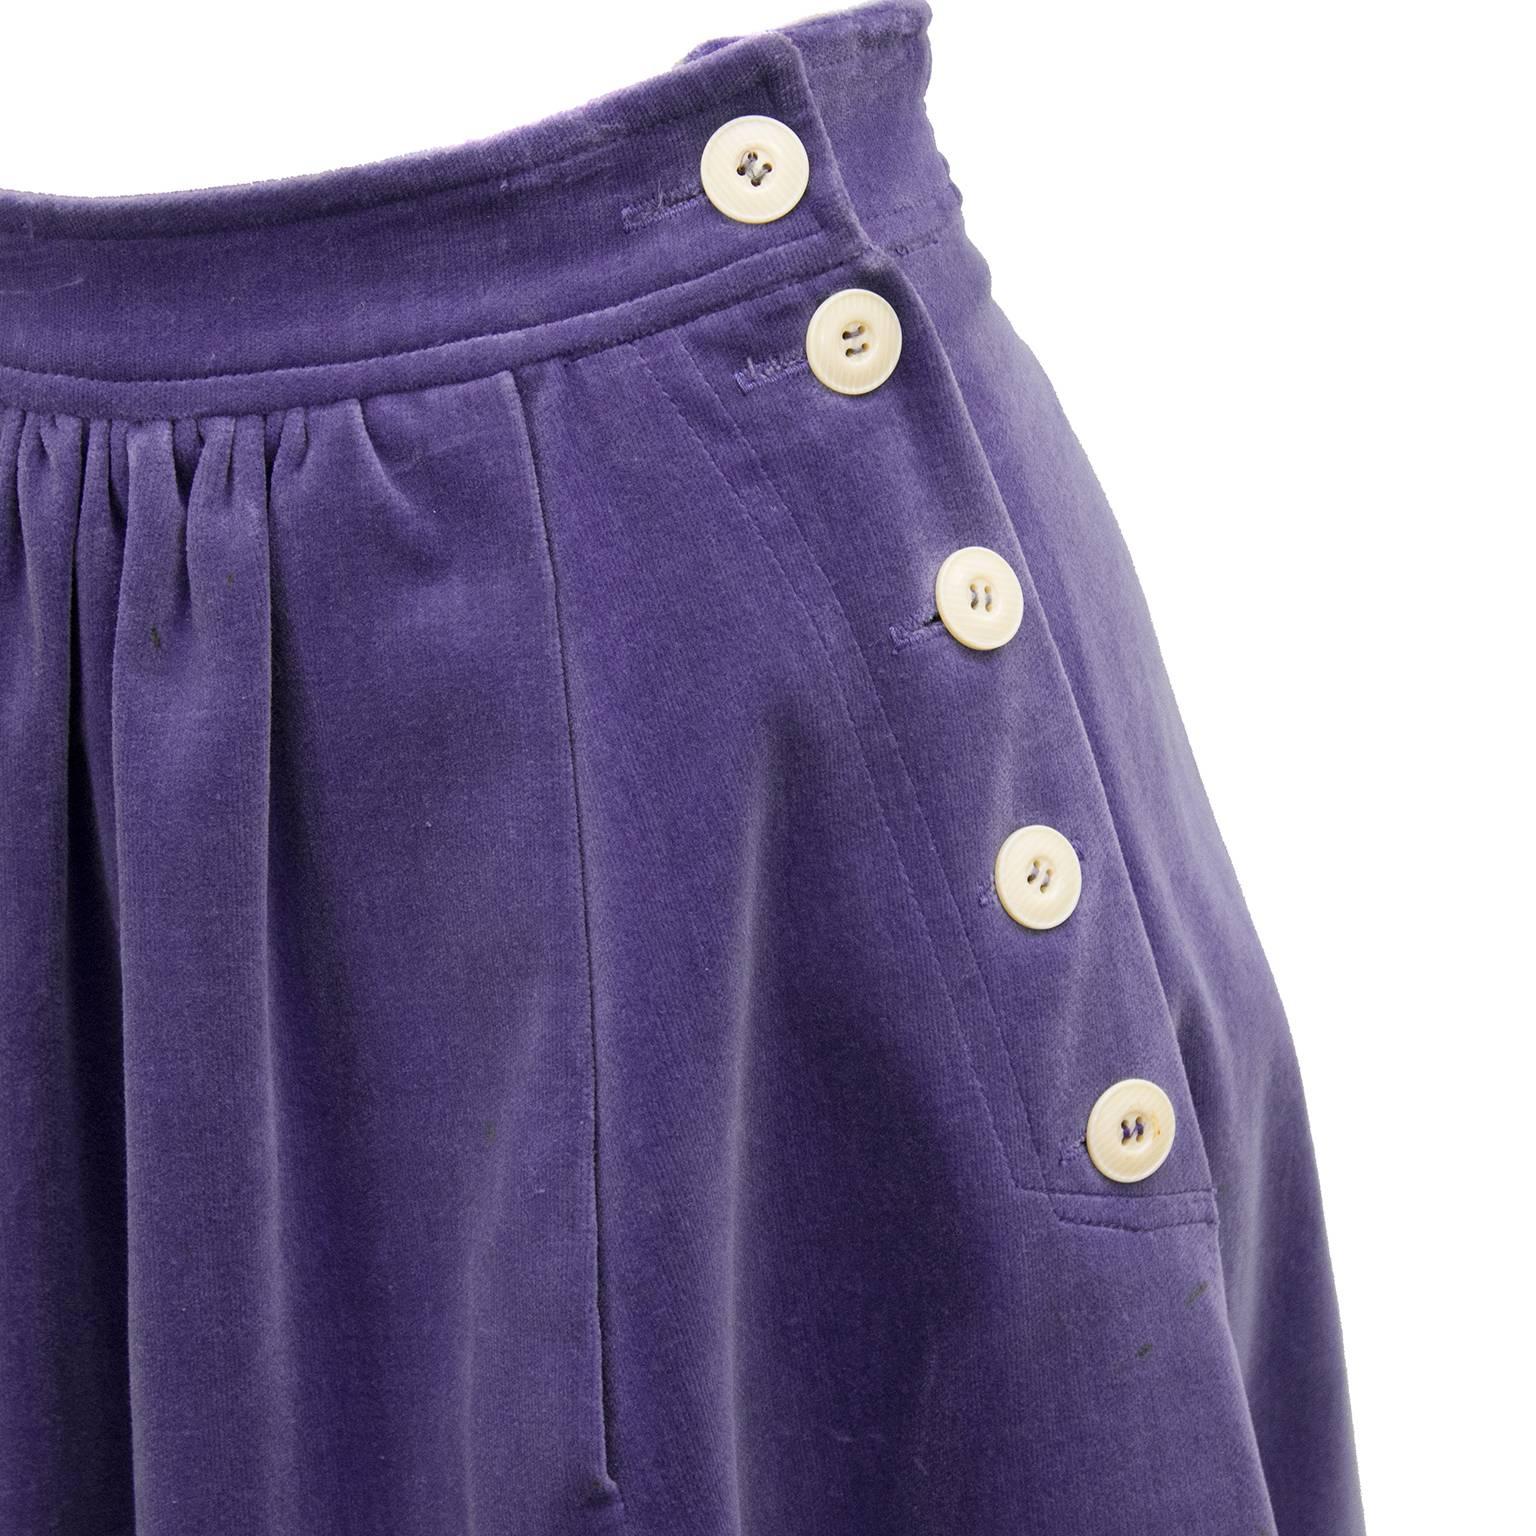 1971 Gudule Paris Lavender Velvet Skirt  In Good Condition For Sale In Toronto, Ontario